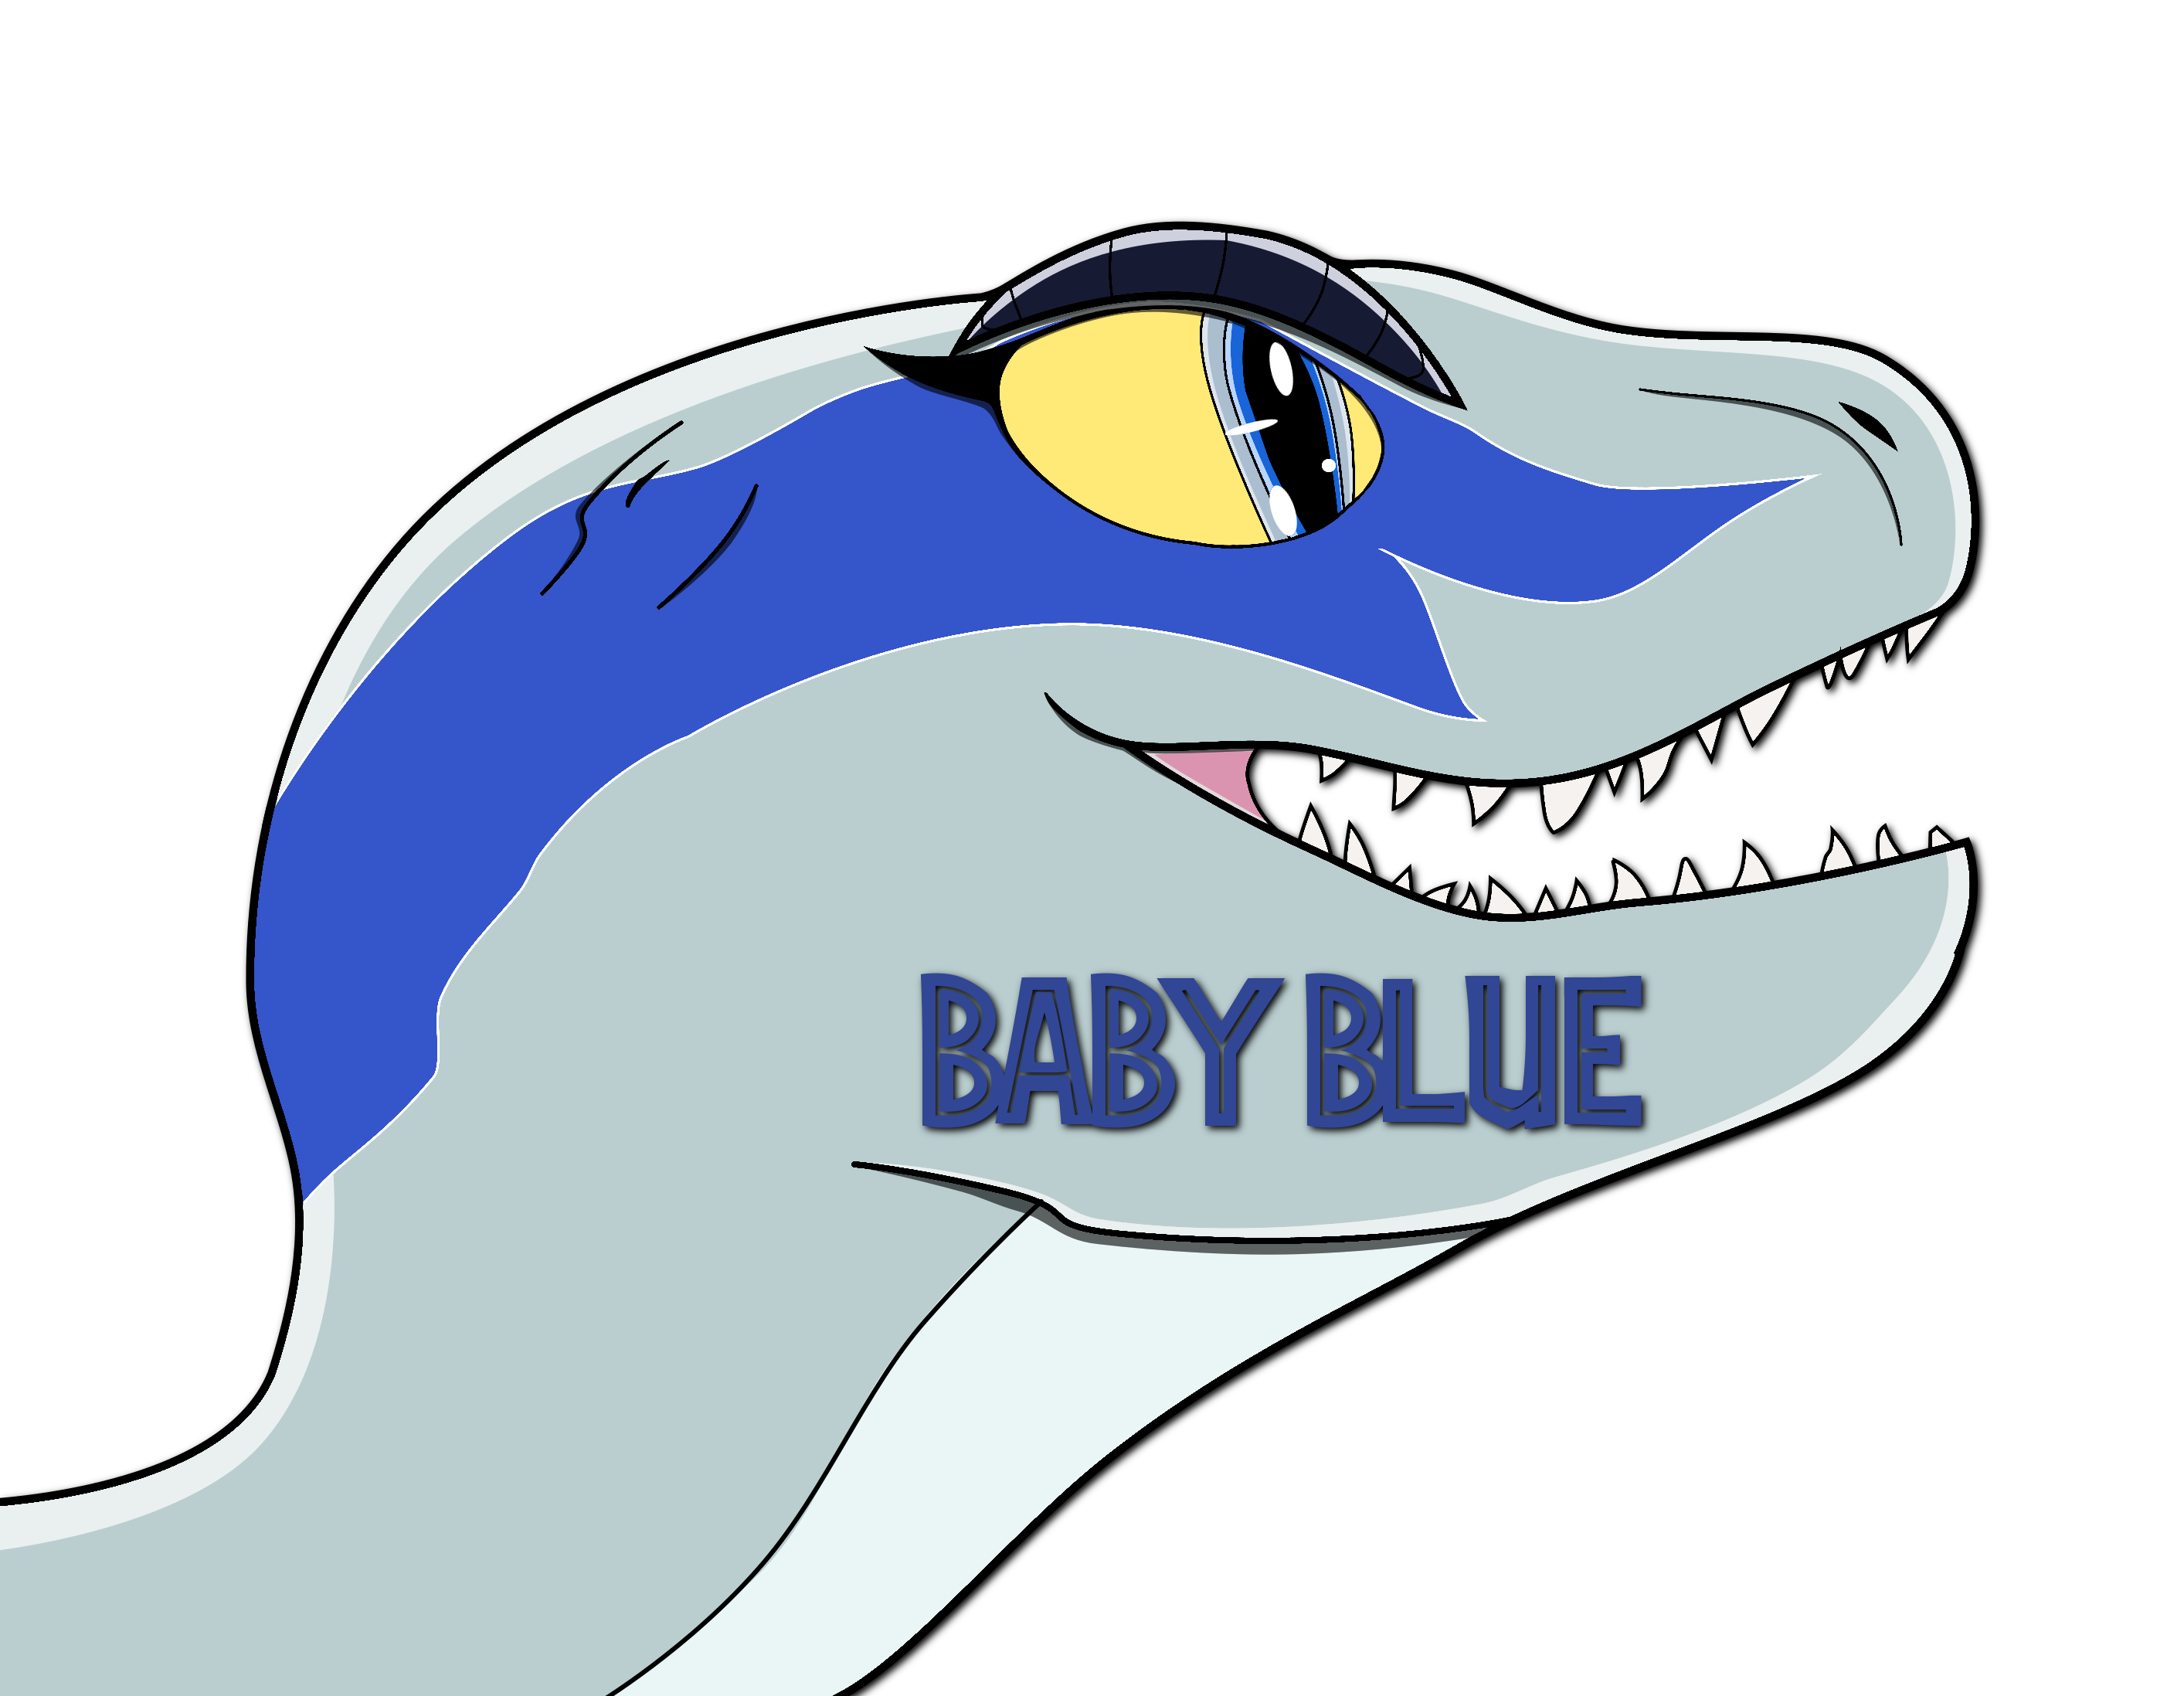 Baby Blue! by SpinosKingdom875 on DeviantArt